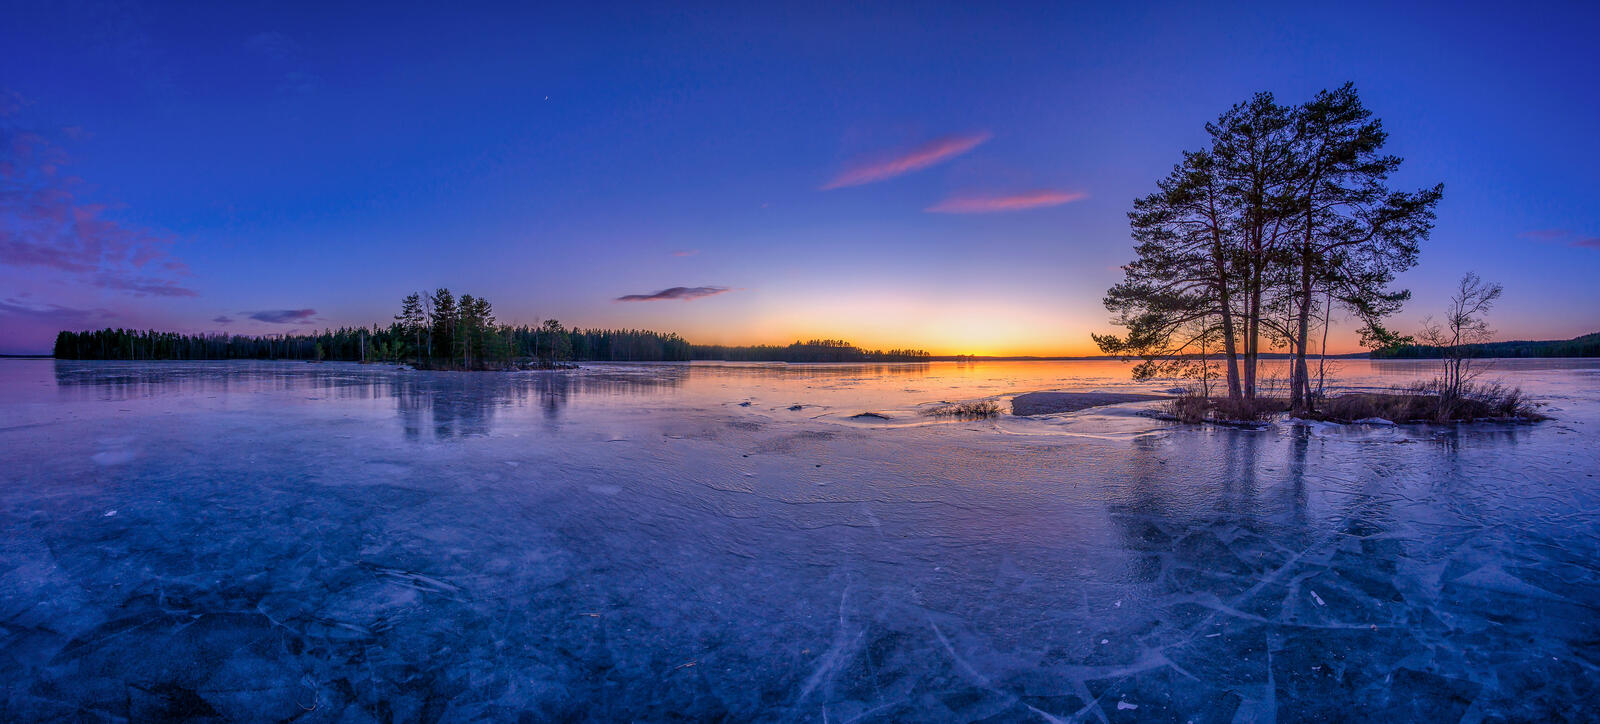 Обои Finland Kouvola озеро на рабочий стол